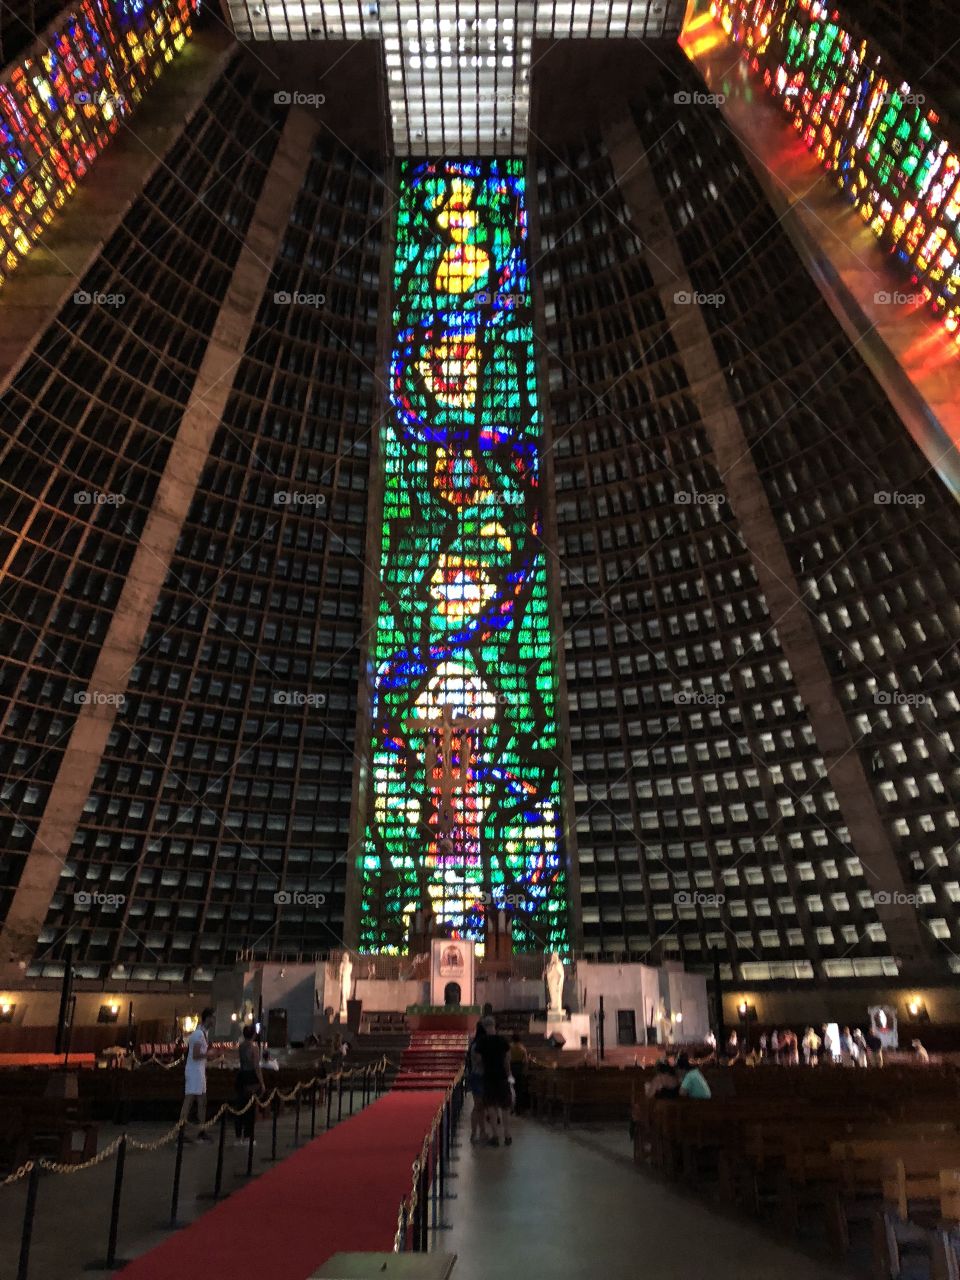 Catedral Metropolitana do Rio de Janeiro - Fevereiro 2018 - Centro da Cidade 